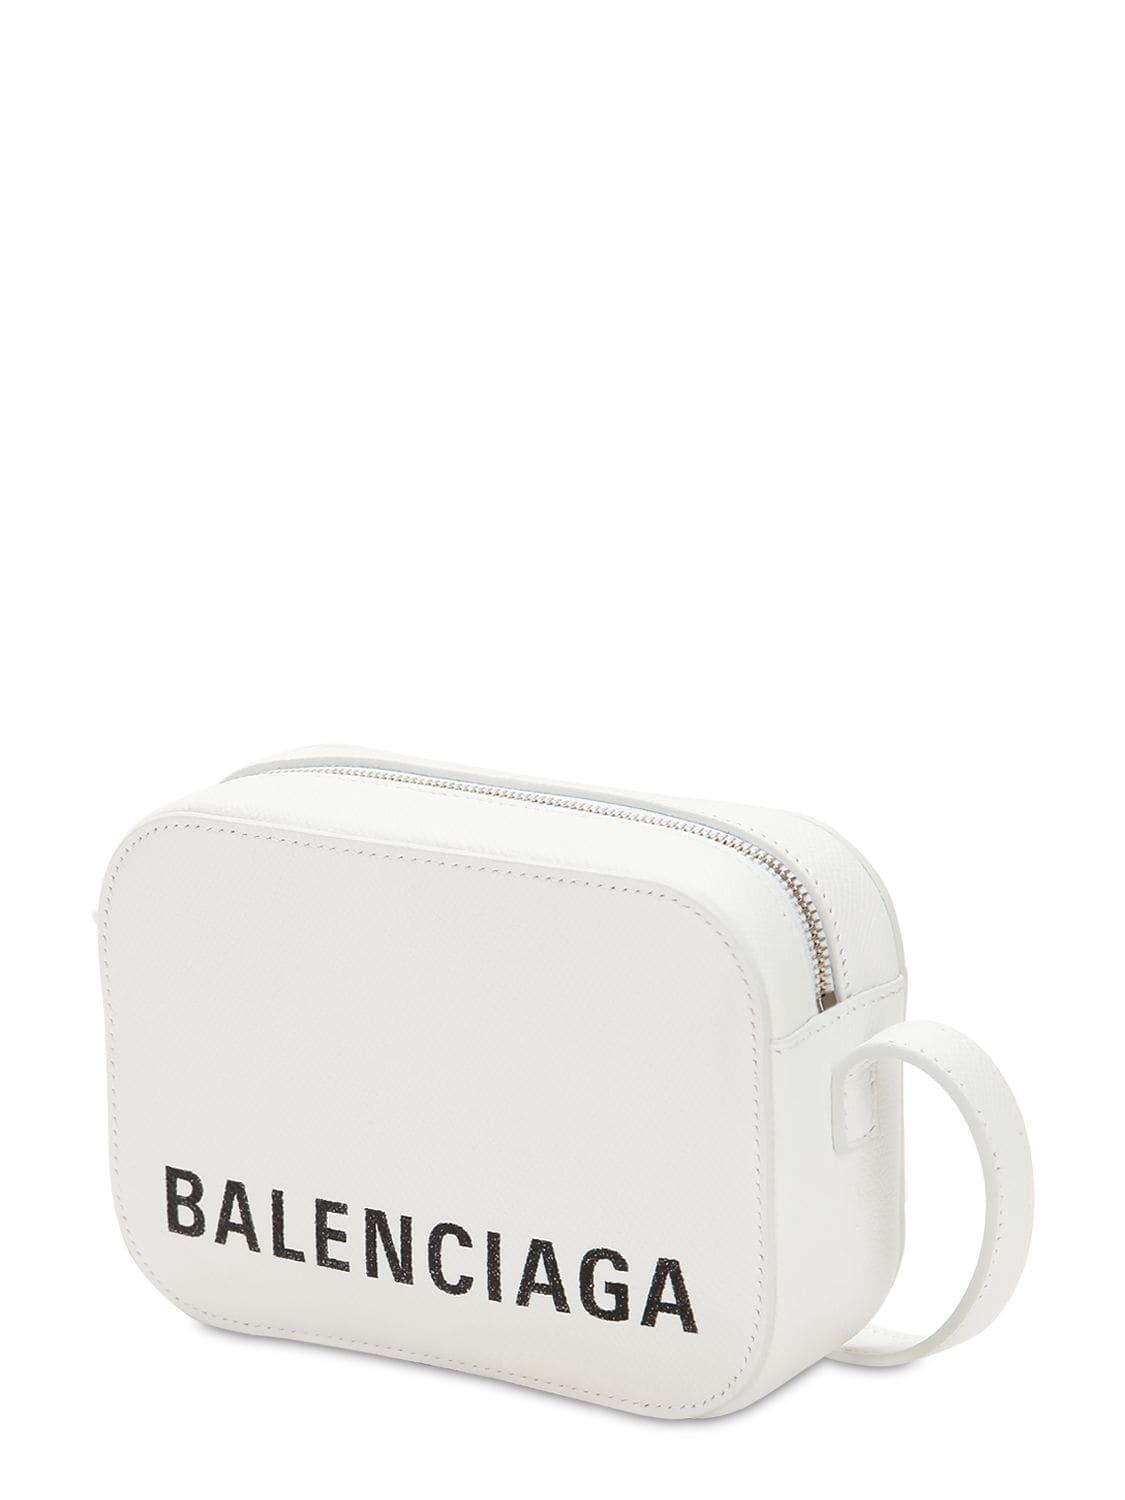 Balenciaga Xs Ville Leather Camera Bag in White - Lyst